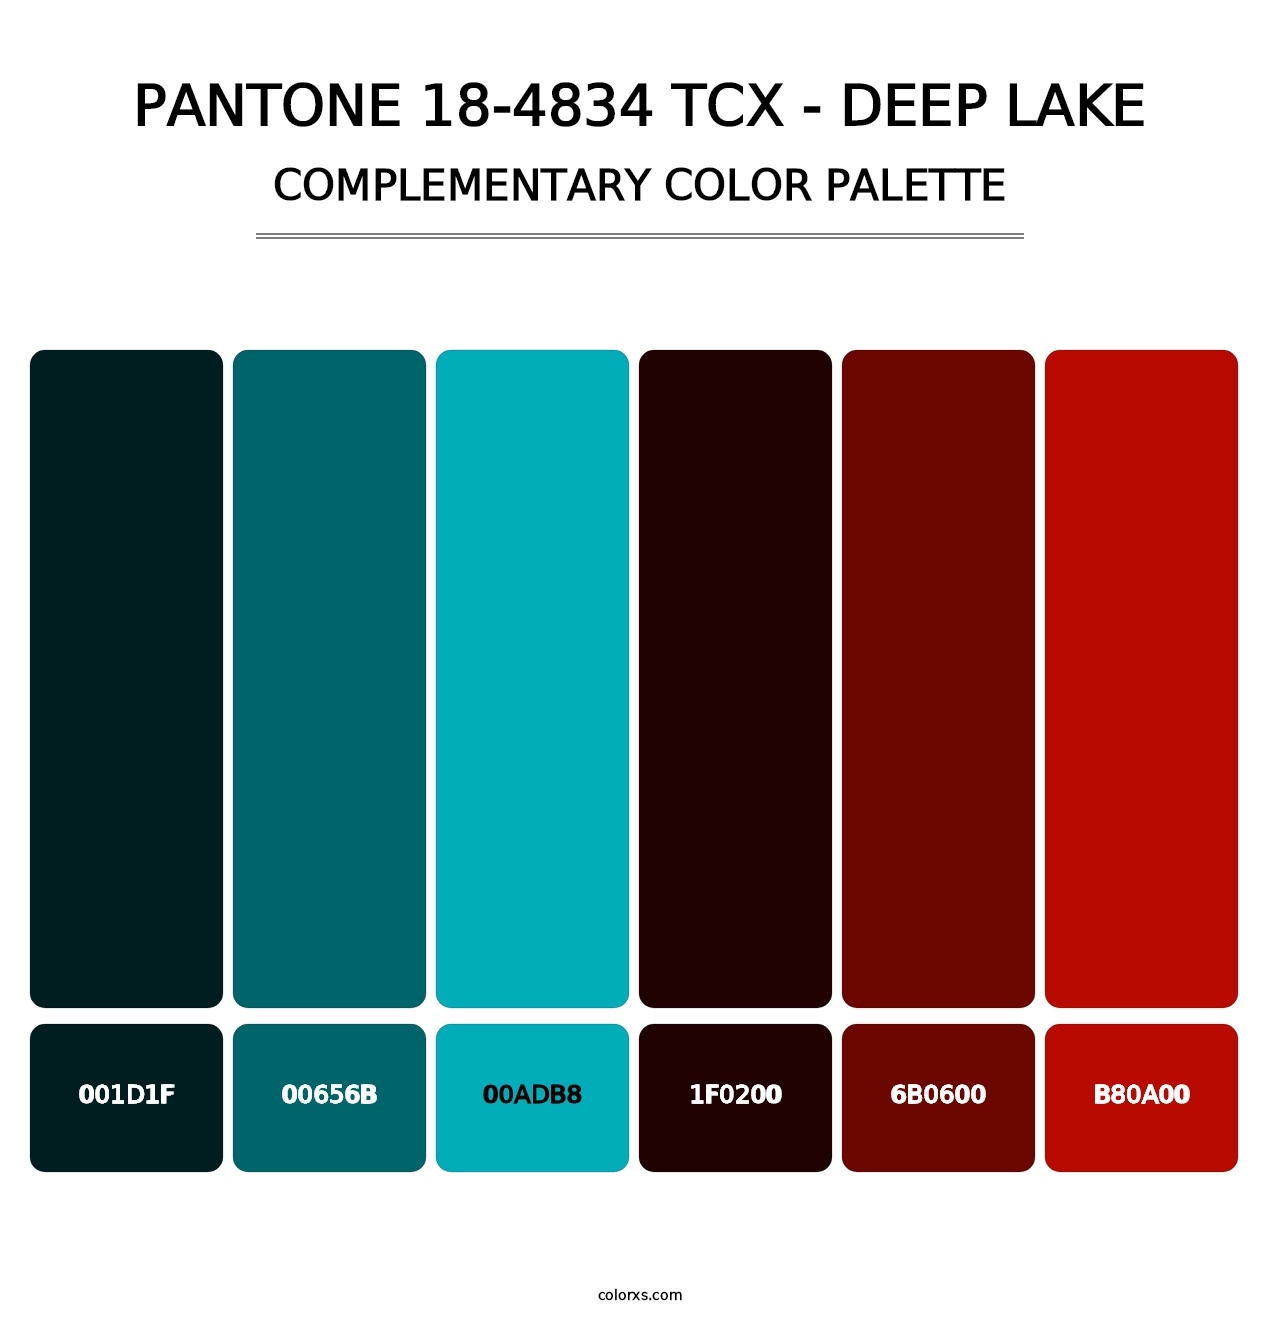 PANTONE 18-4834 TCX - Deep Lake - Complementary Color Palette